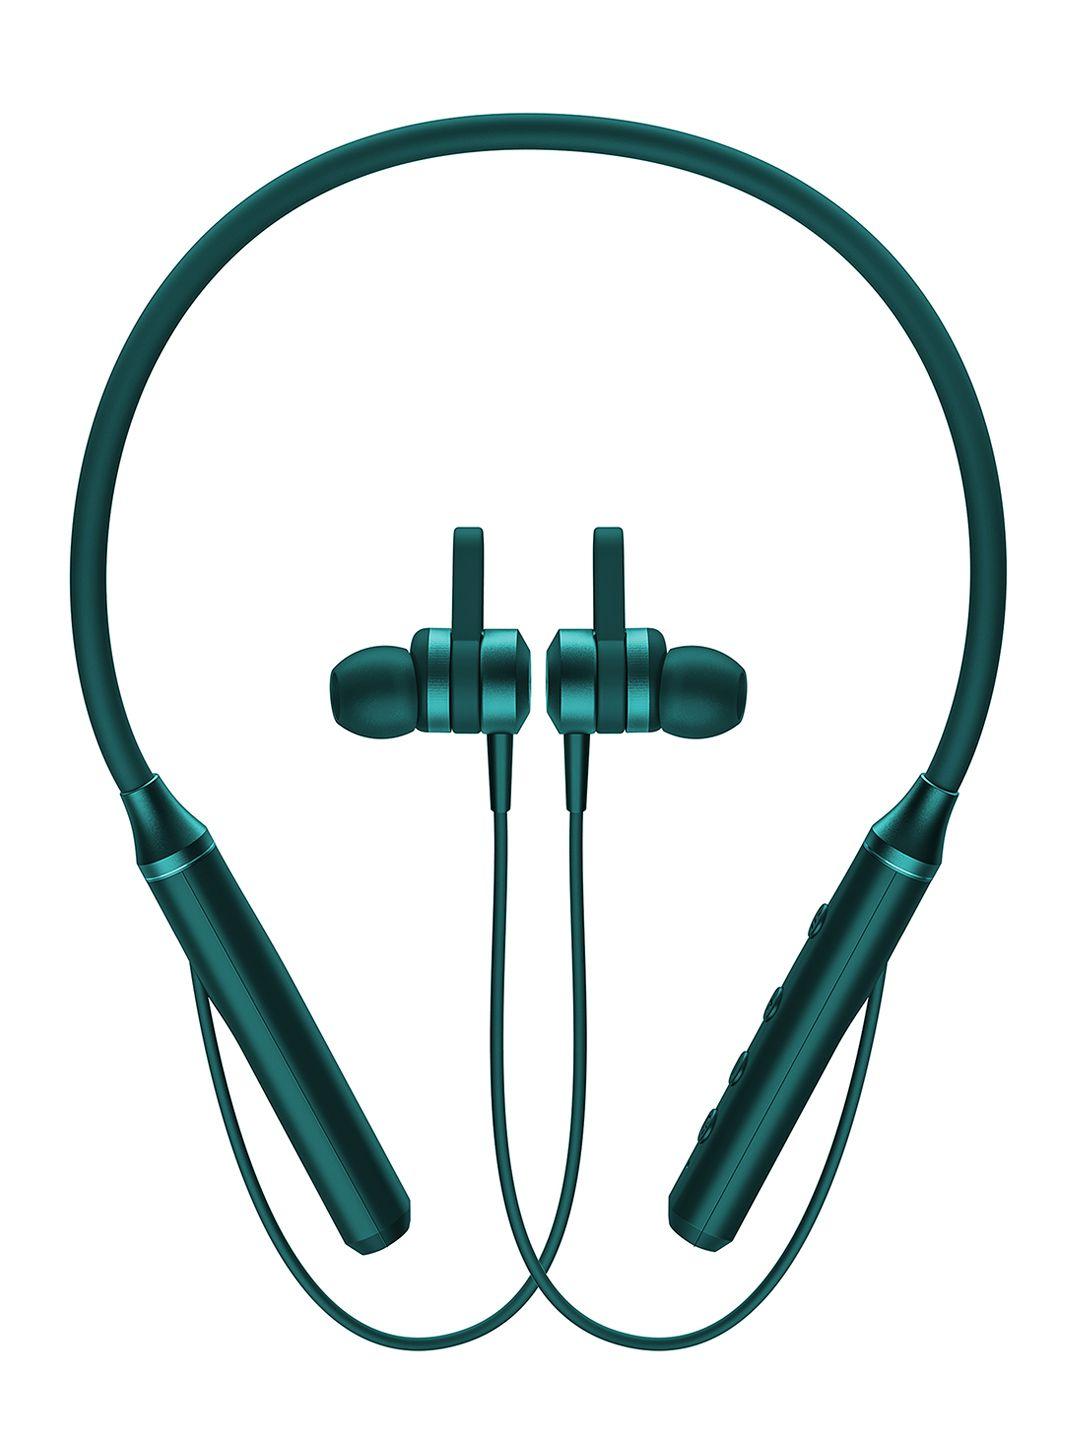 Cellecor Green Wireless Bluetooth Earphone Neckband 25 Hours Playback Noise Cancelation Headphones